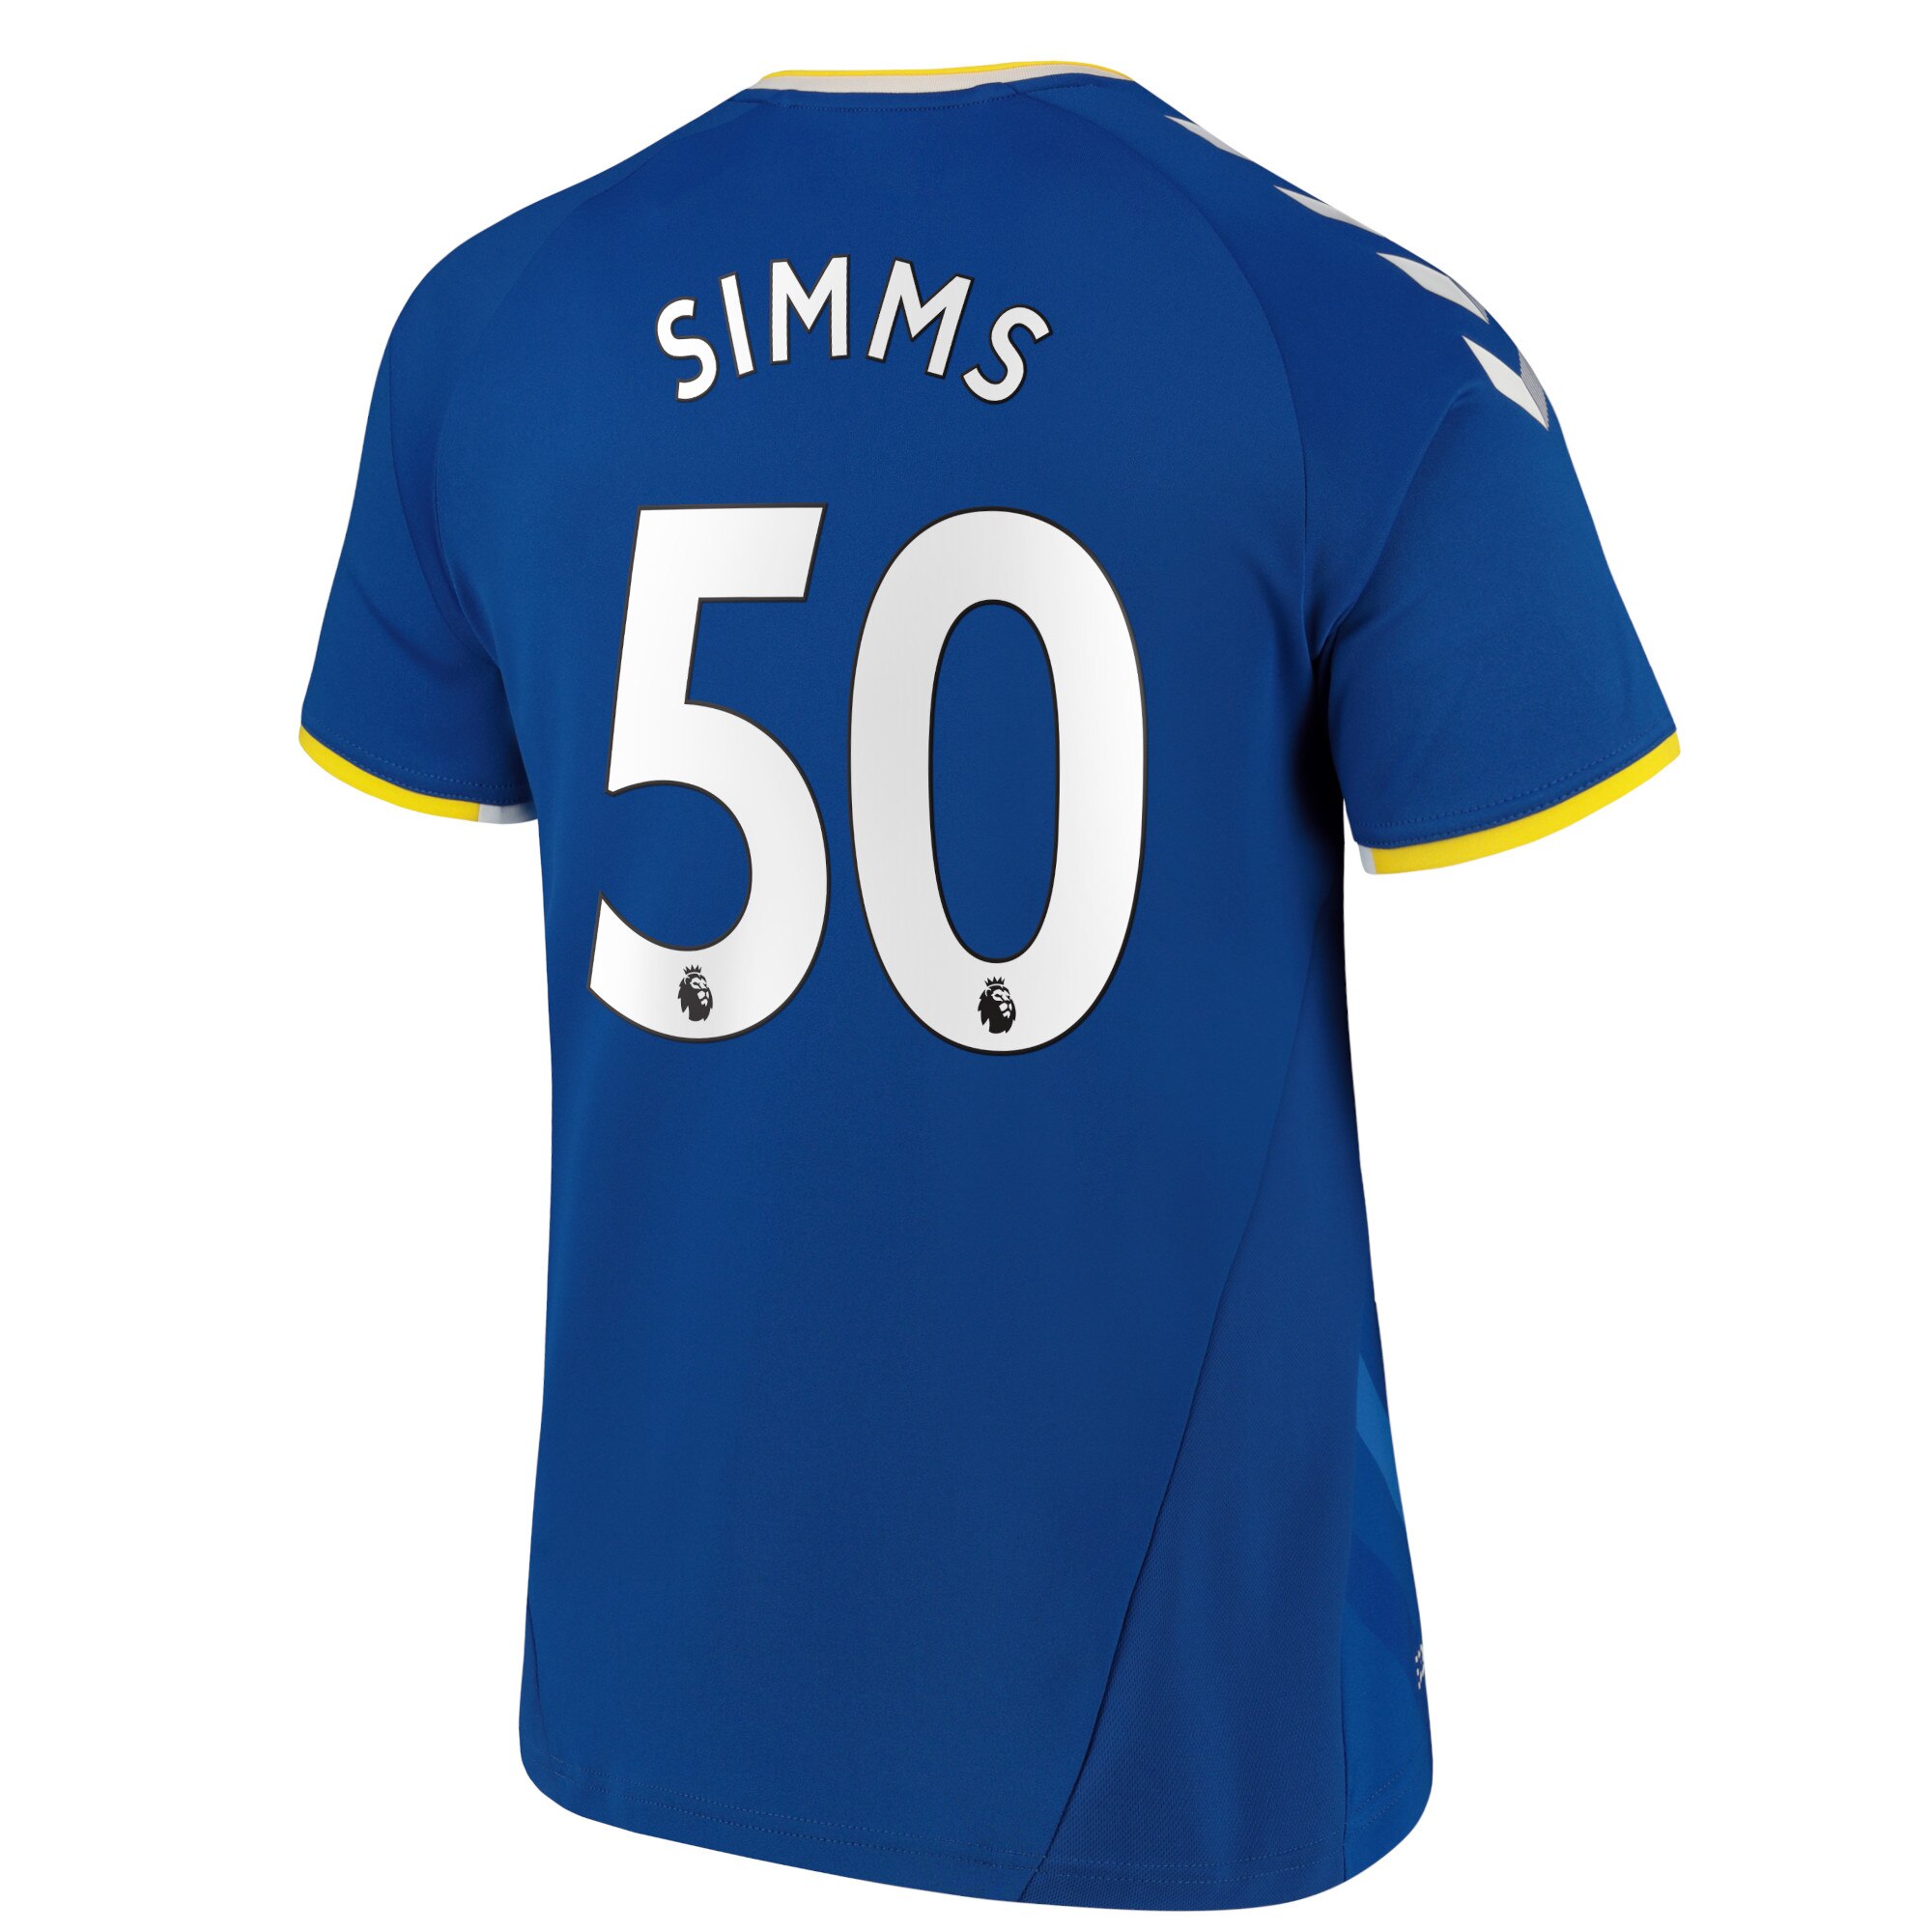 Everton Home Shirt - 2021-22 with Simms 50 printing